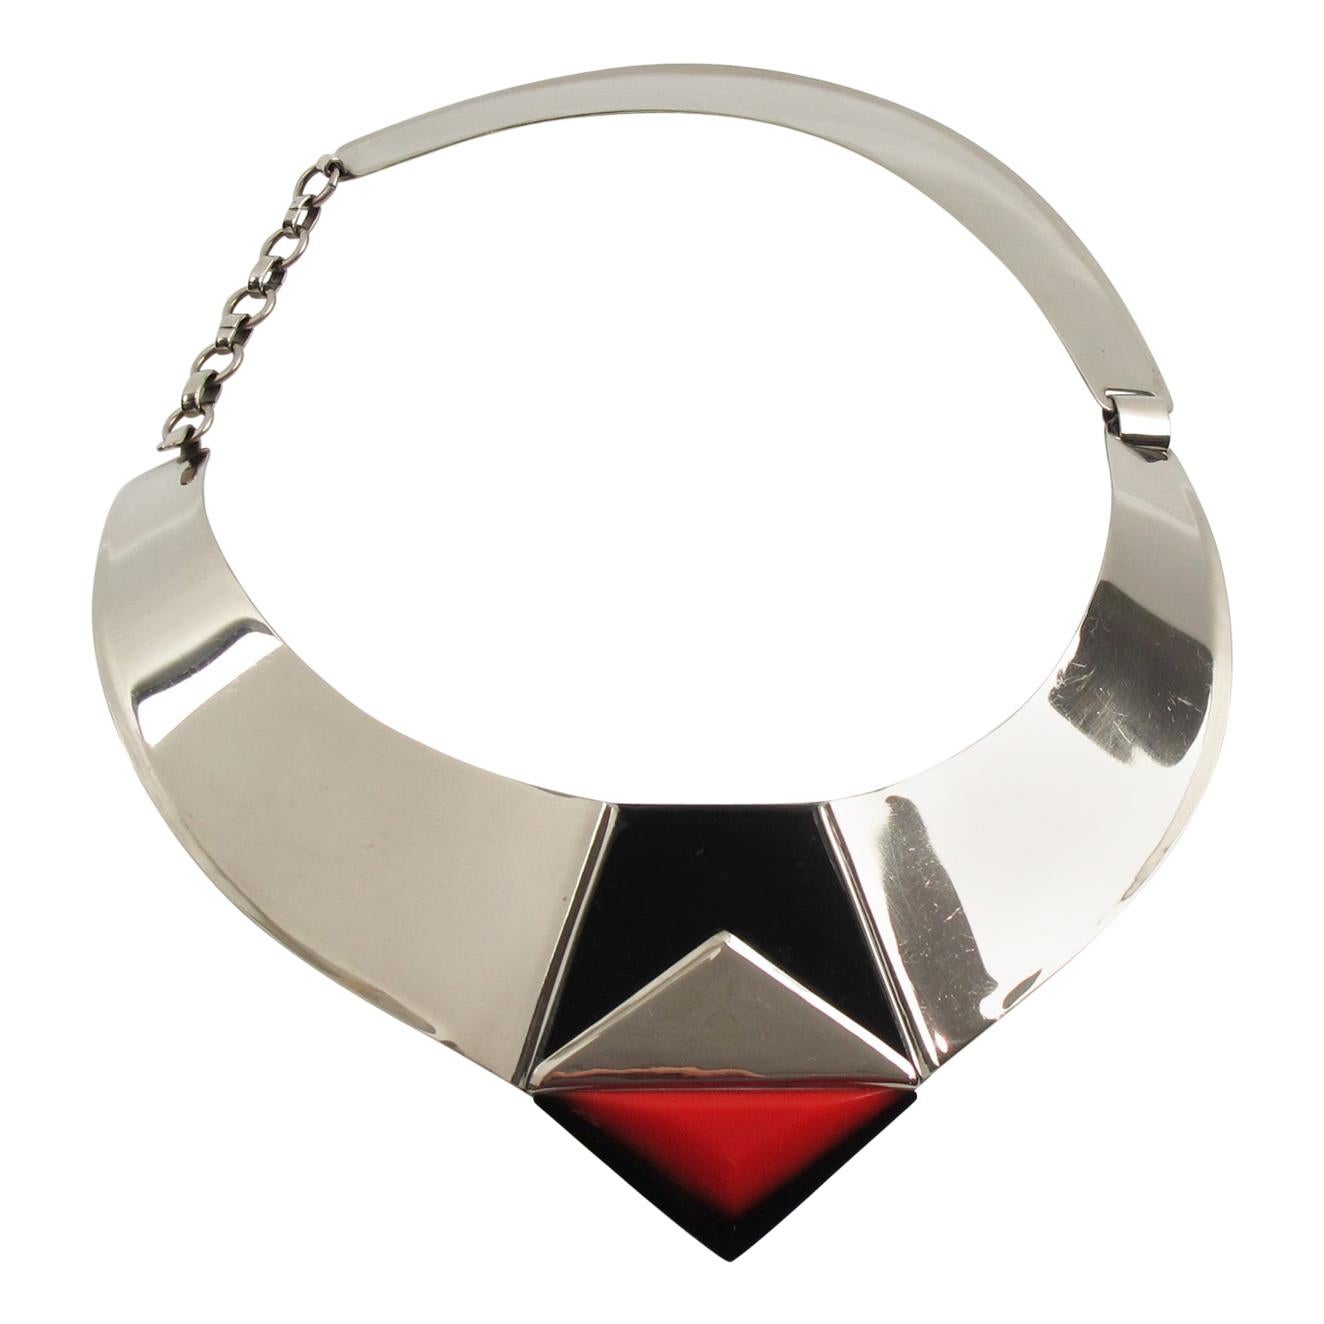 Fabrice Paris Art Deco Inspired Chrome Necklace